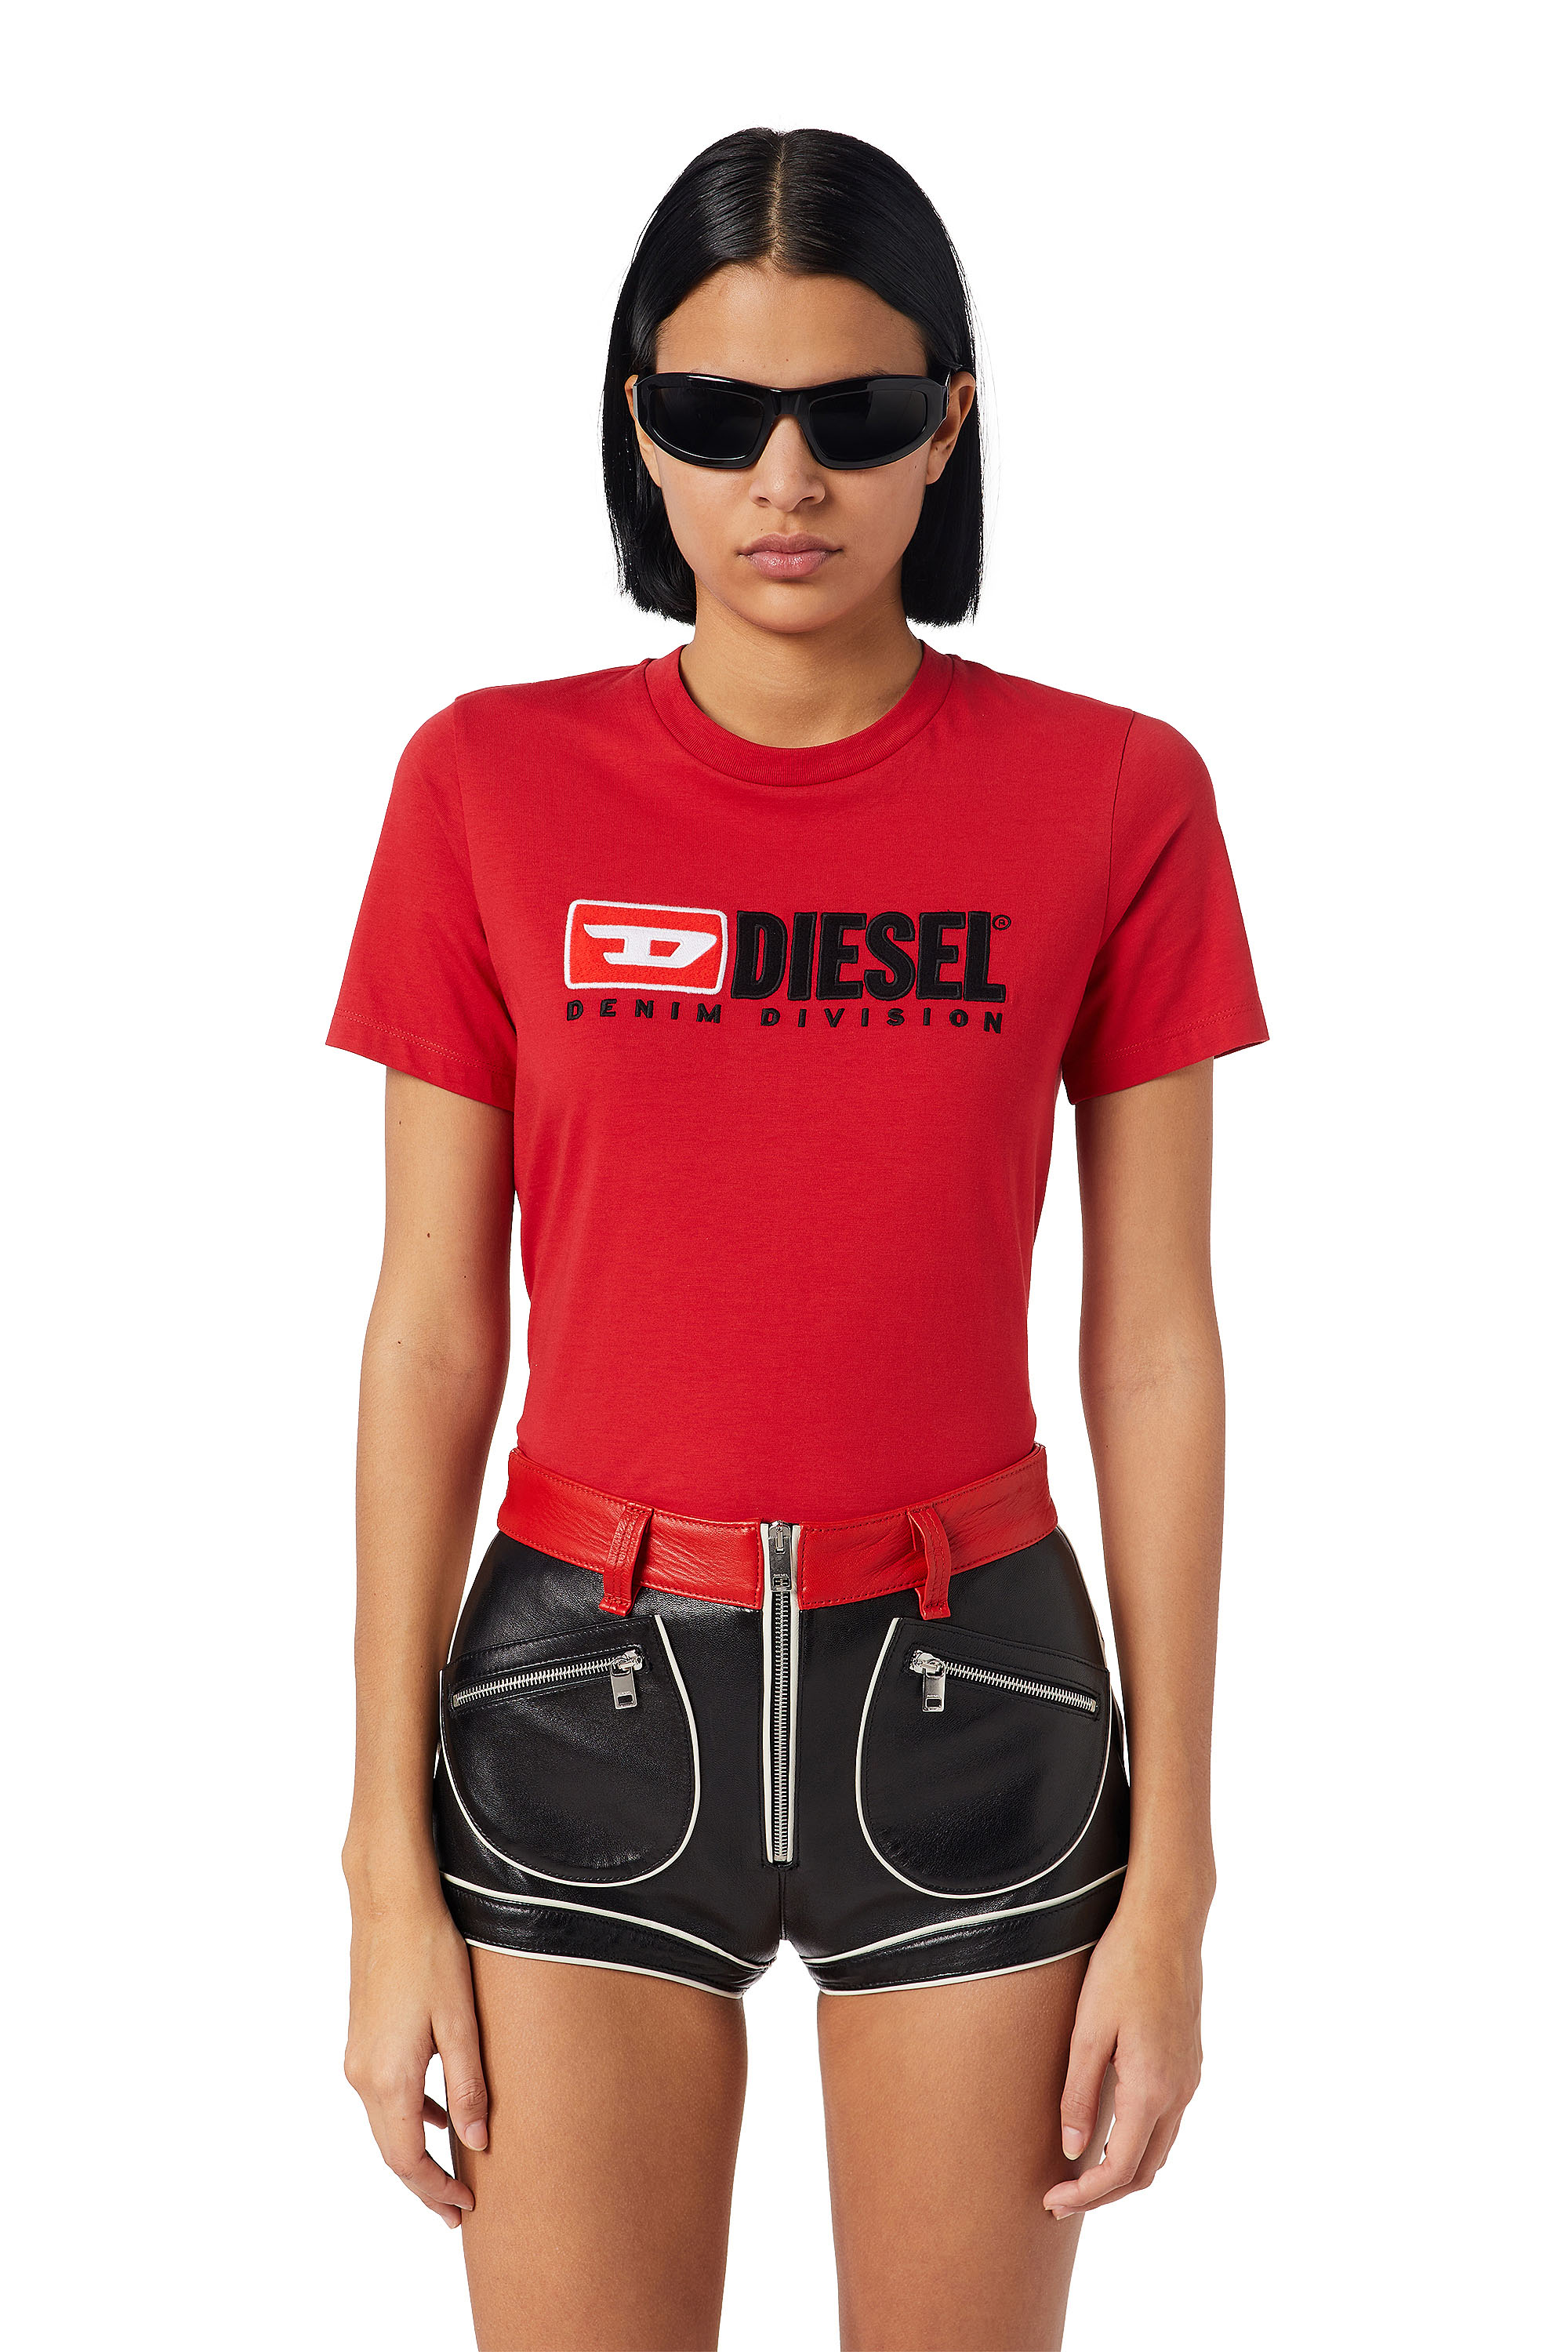 Diesel - T-REG-DIV, Red - Image 1